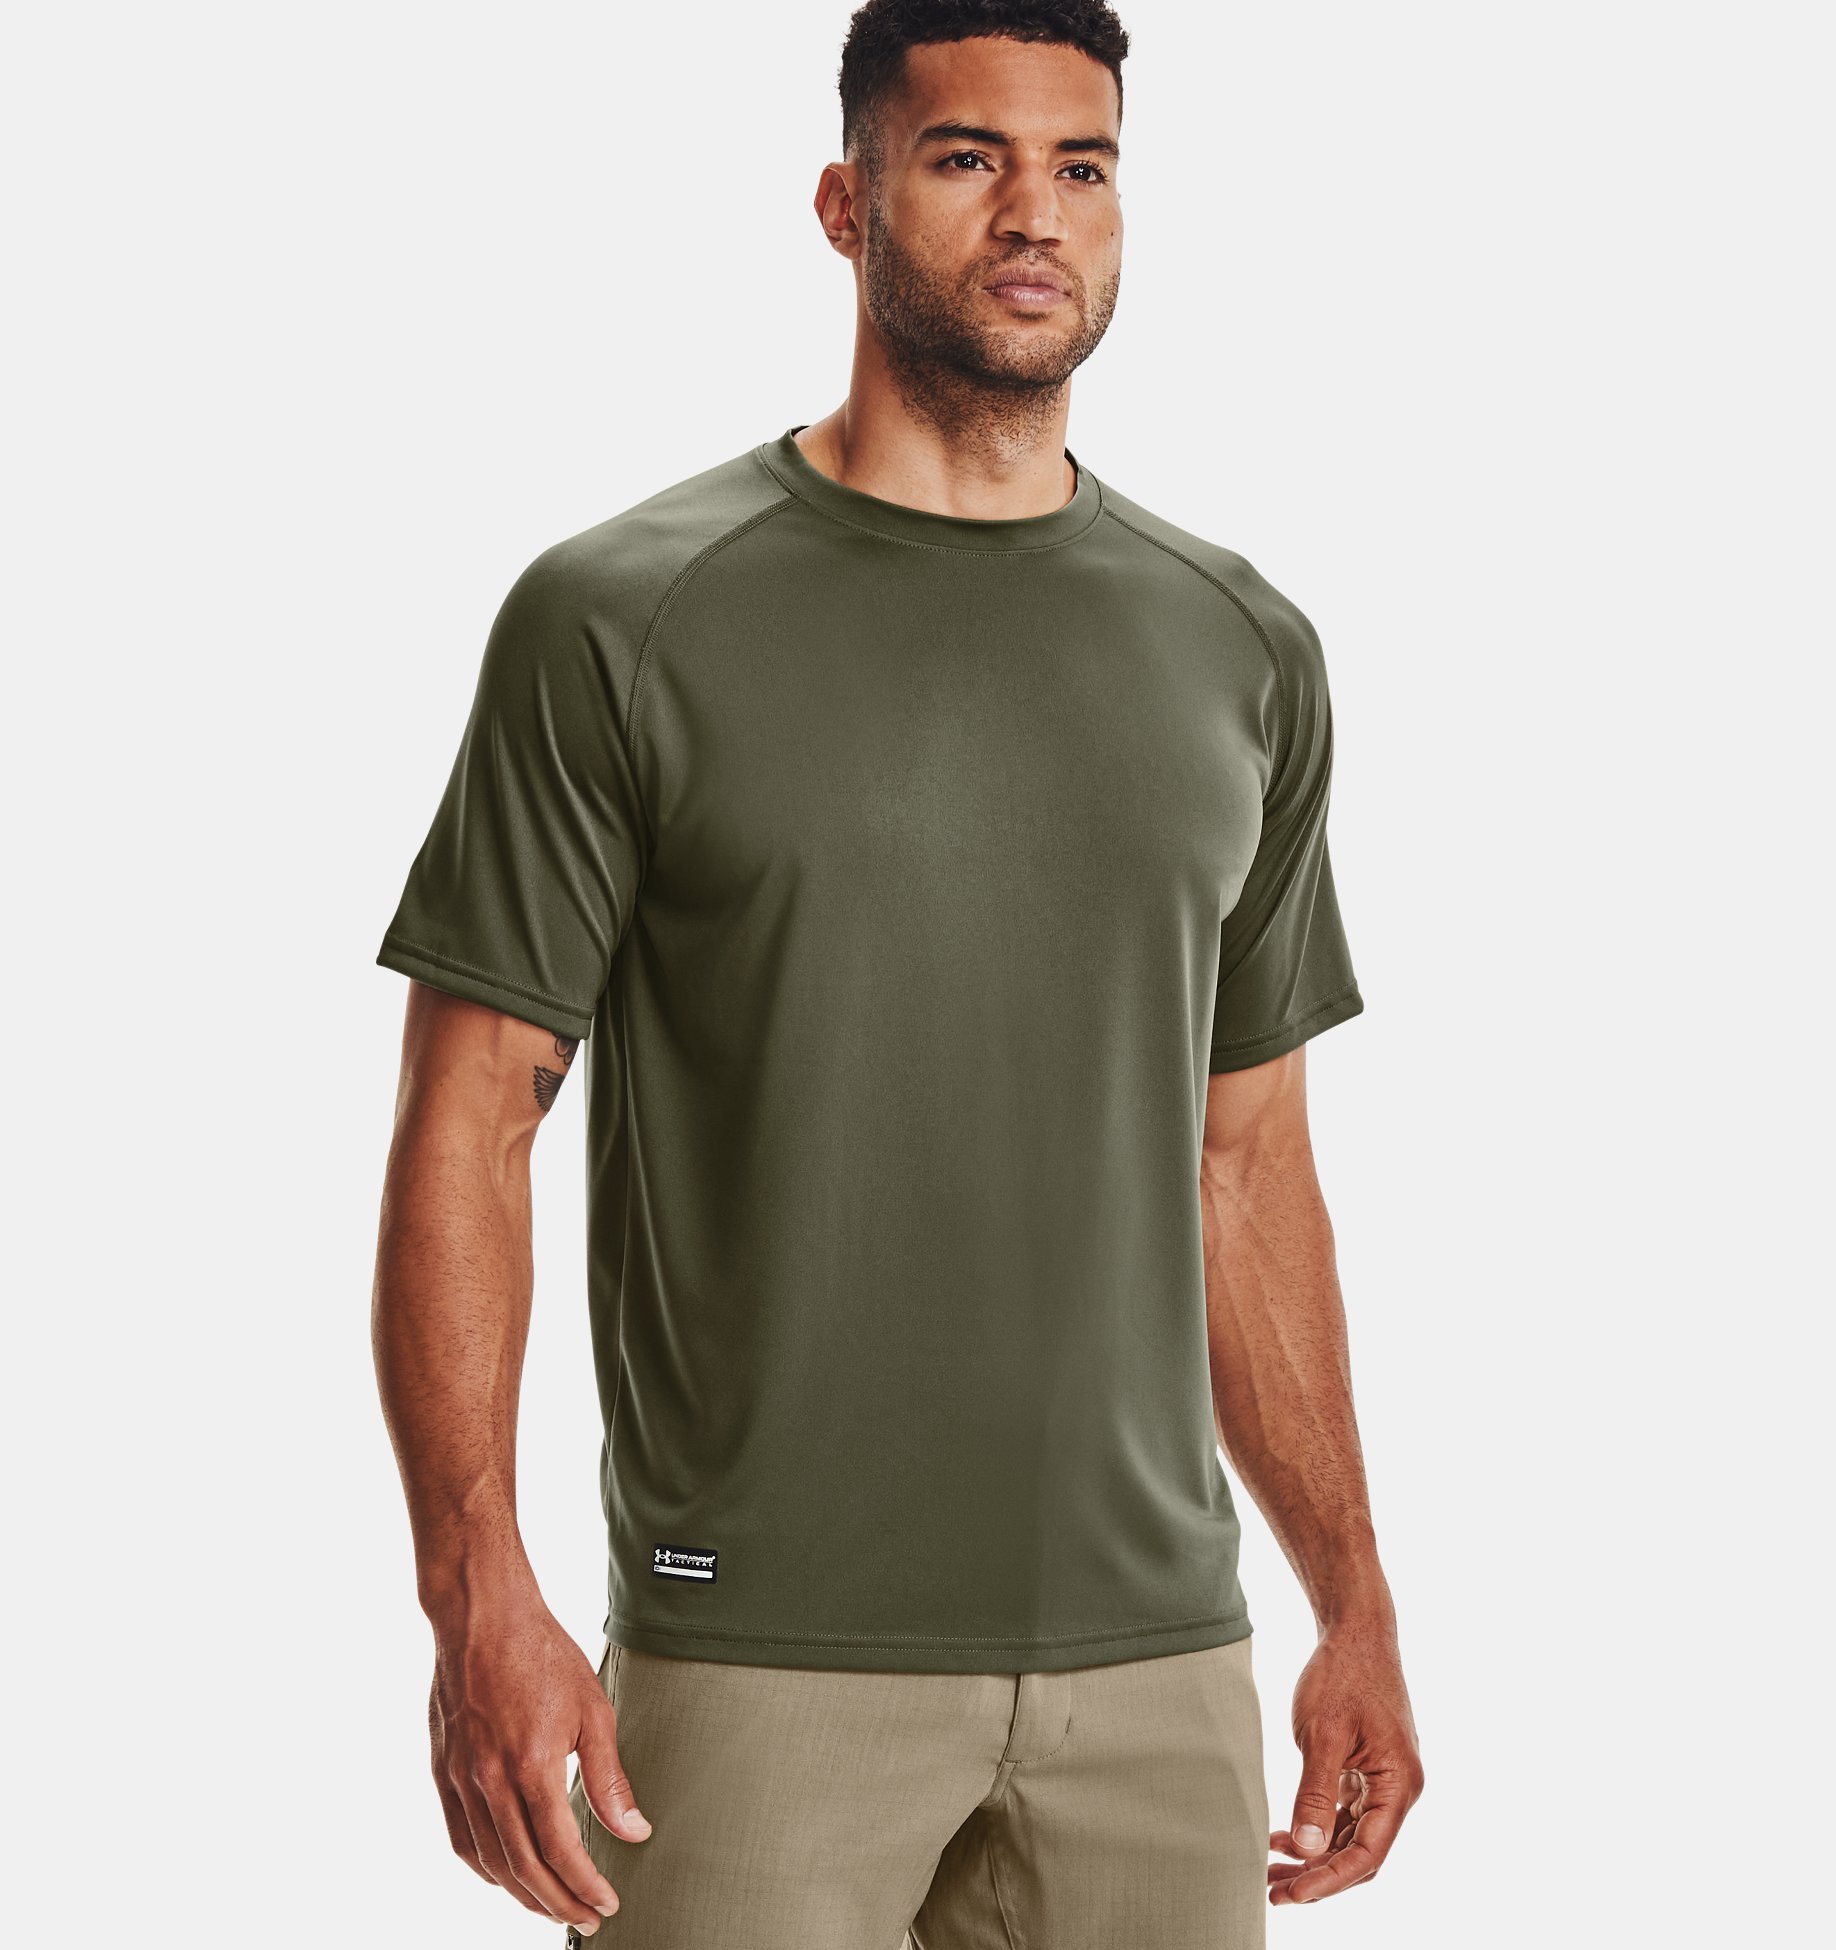 Men Tactical Military Camo Combat Short Sleeve Tee Cargo T-Shirts Tops Training 